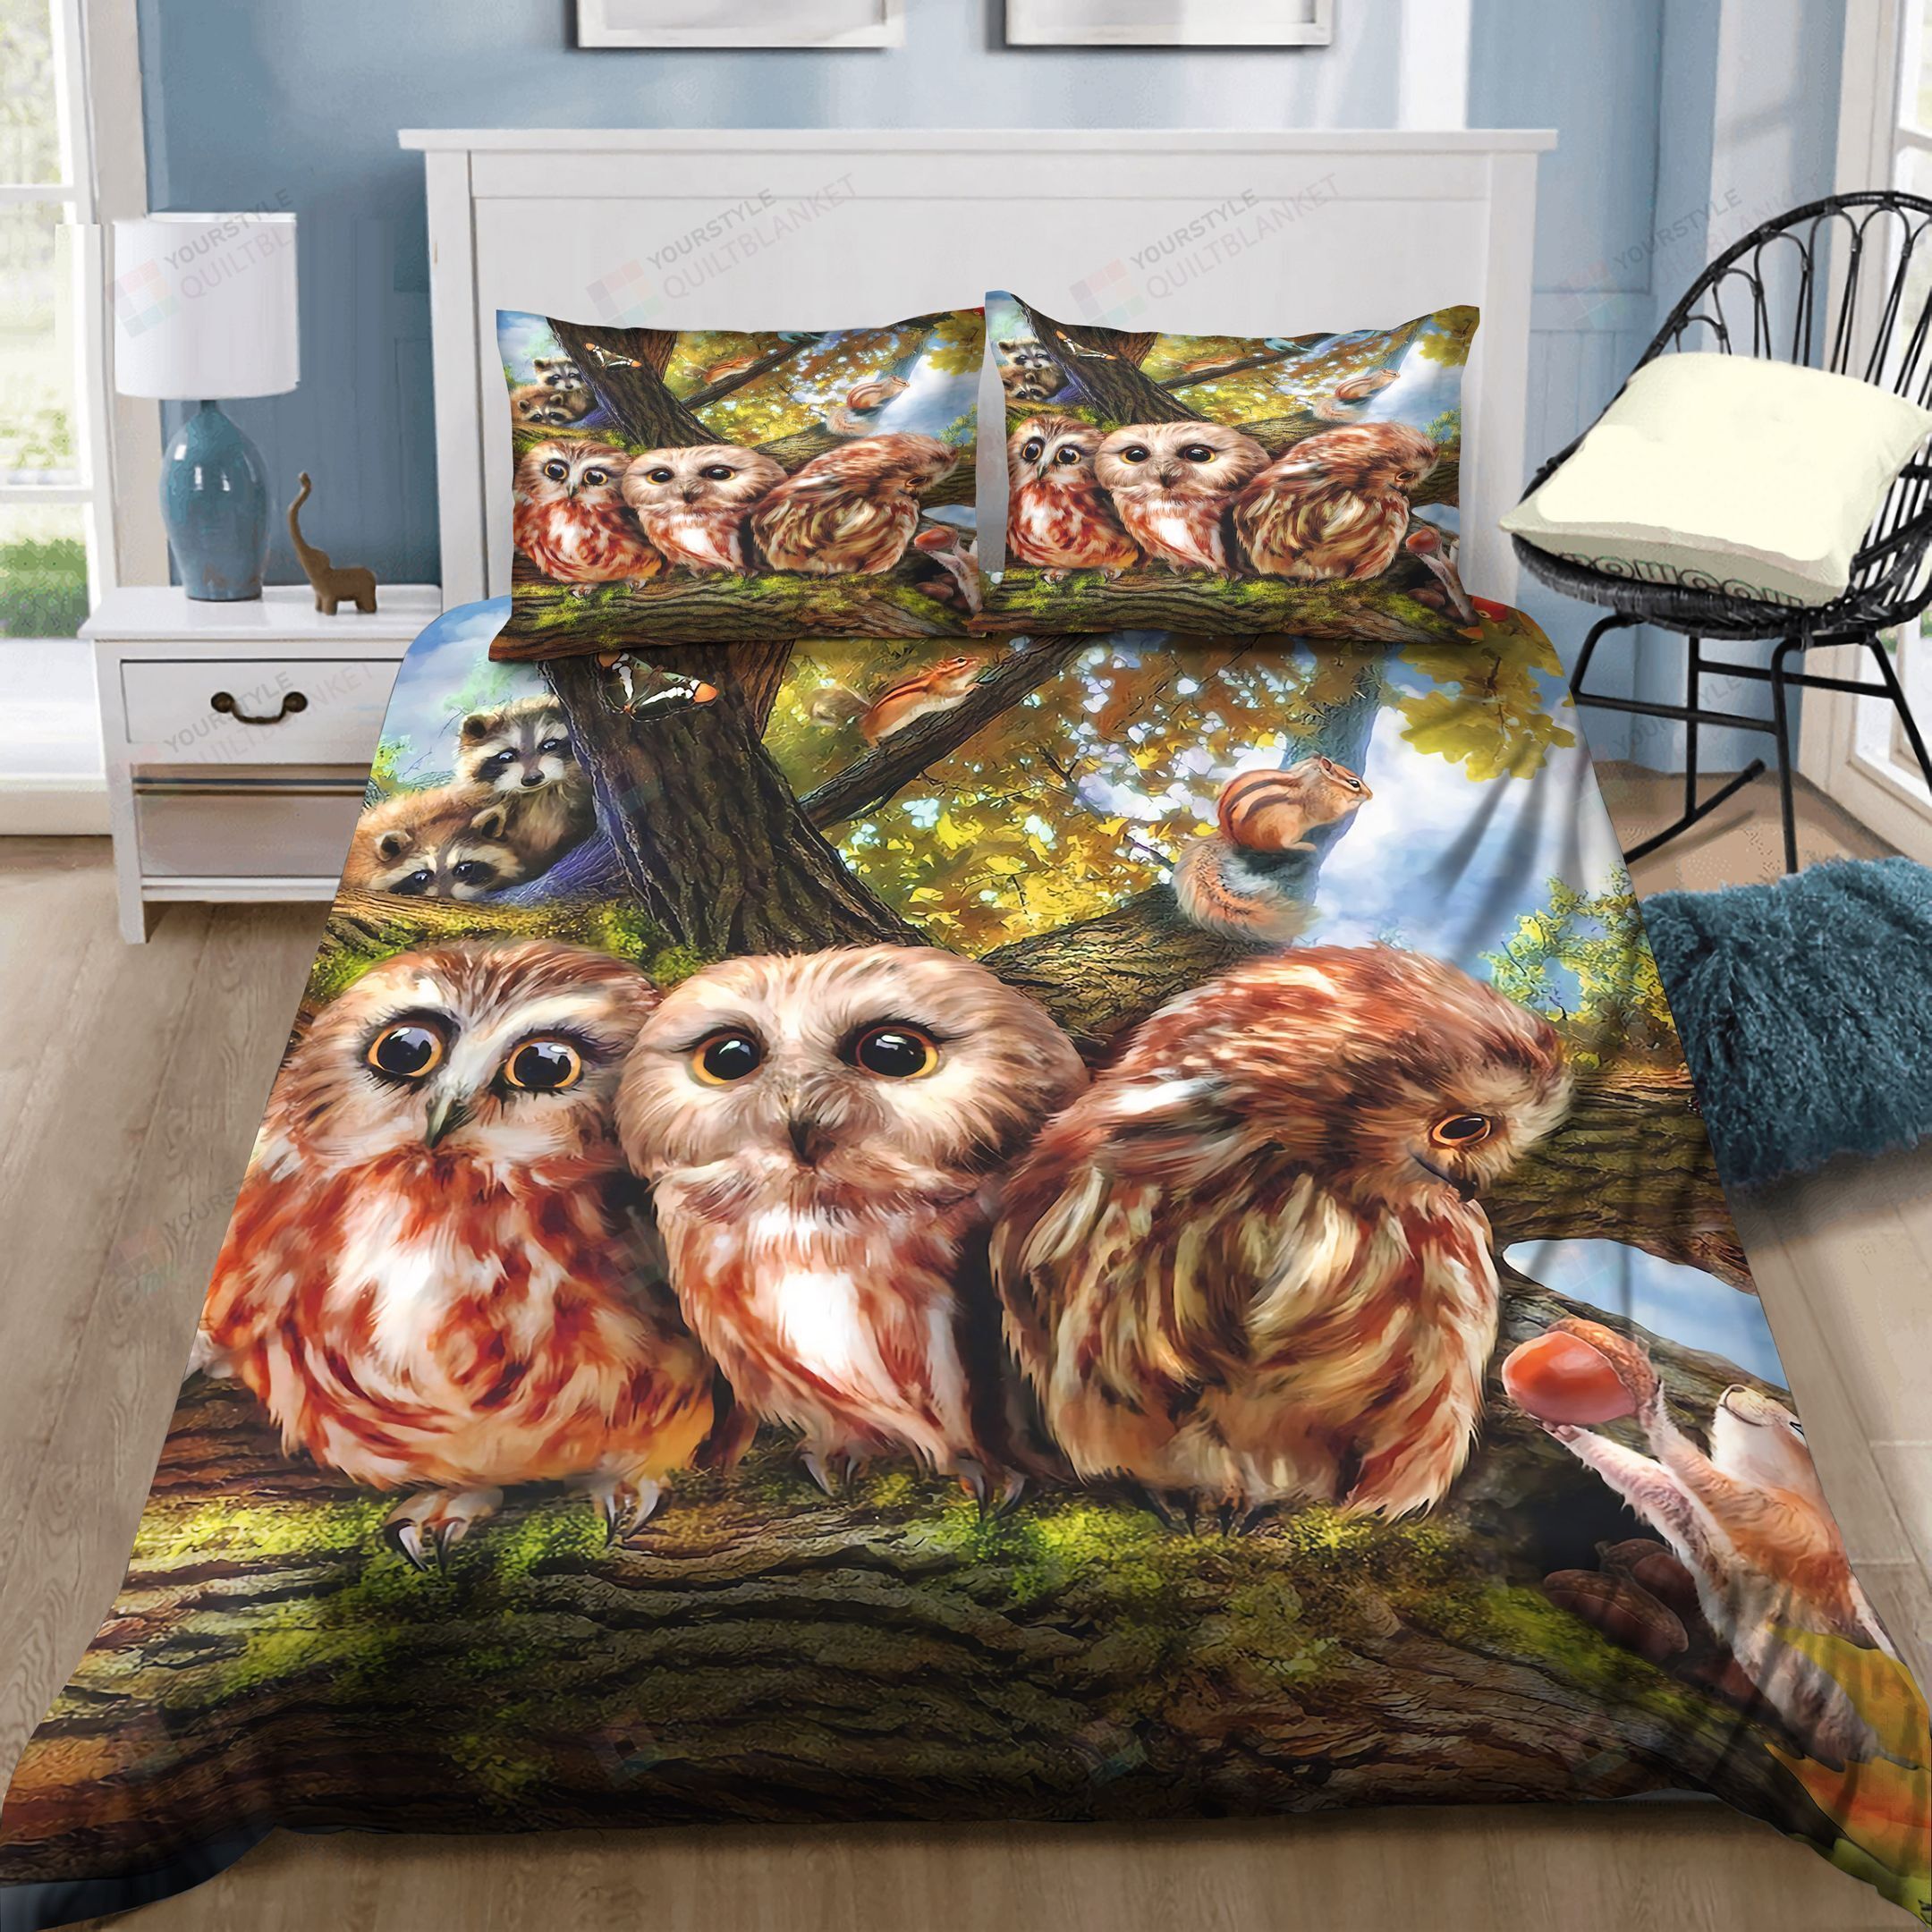 Owl And Squirrel Bedding Set Bed Sheets Spread Comforter Duvet Cover Bedding Sets